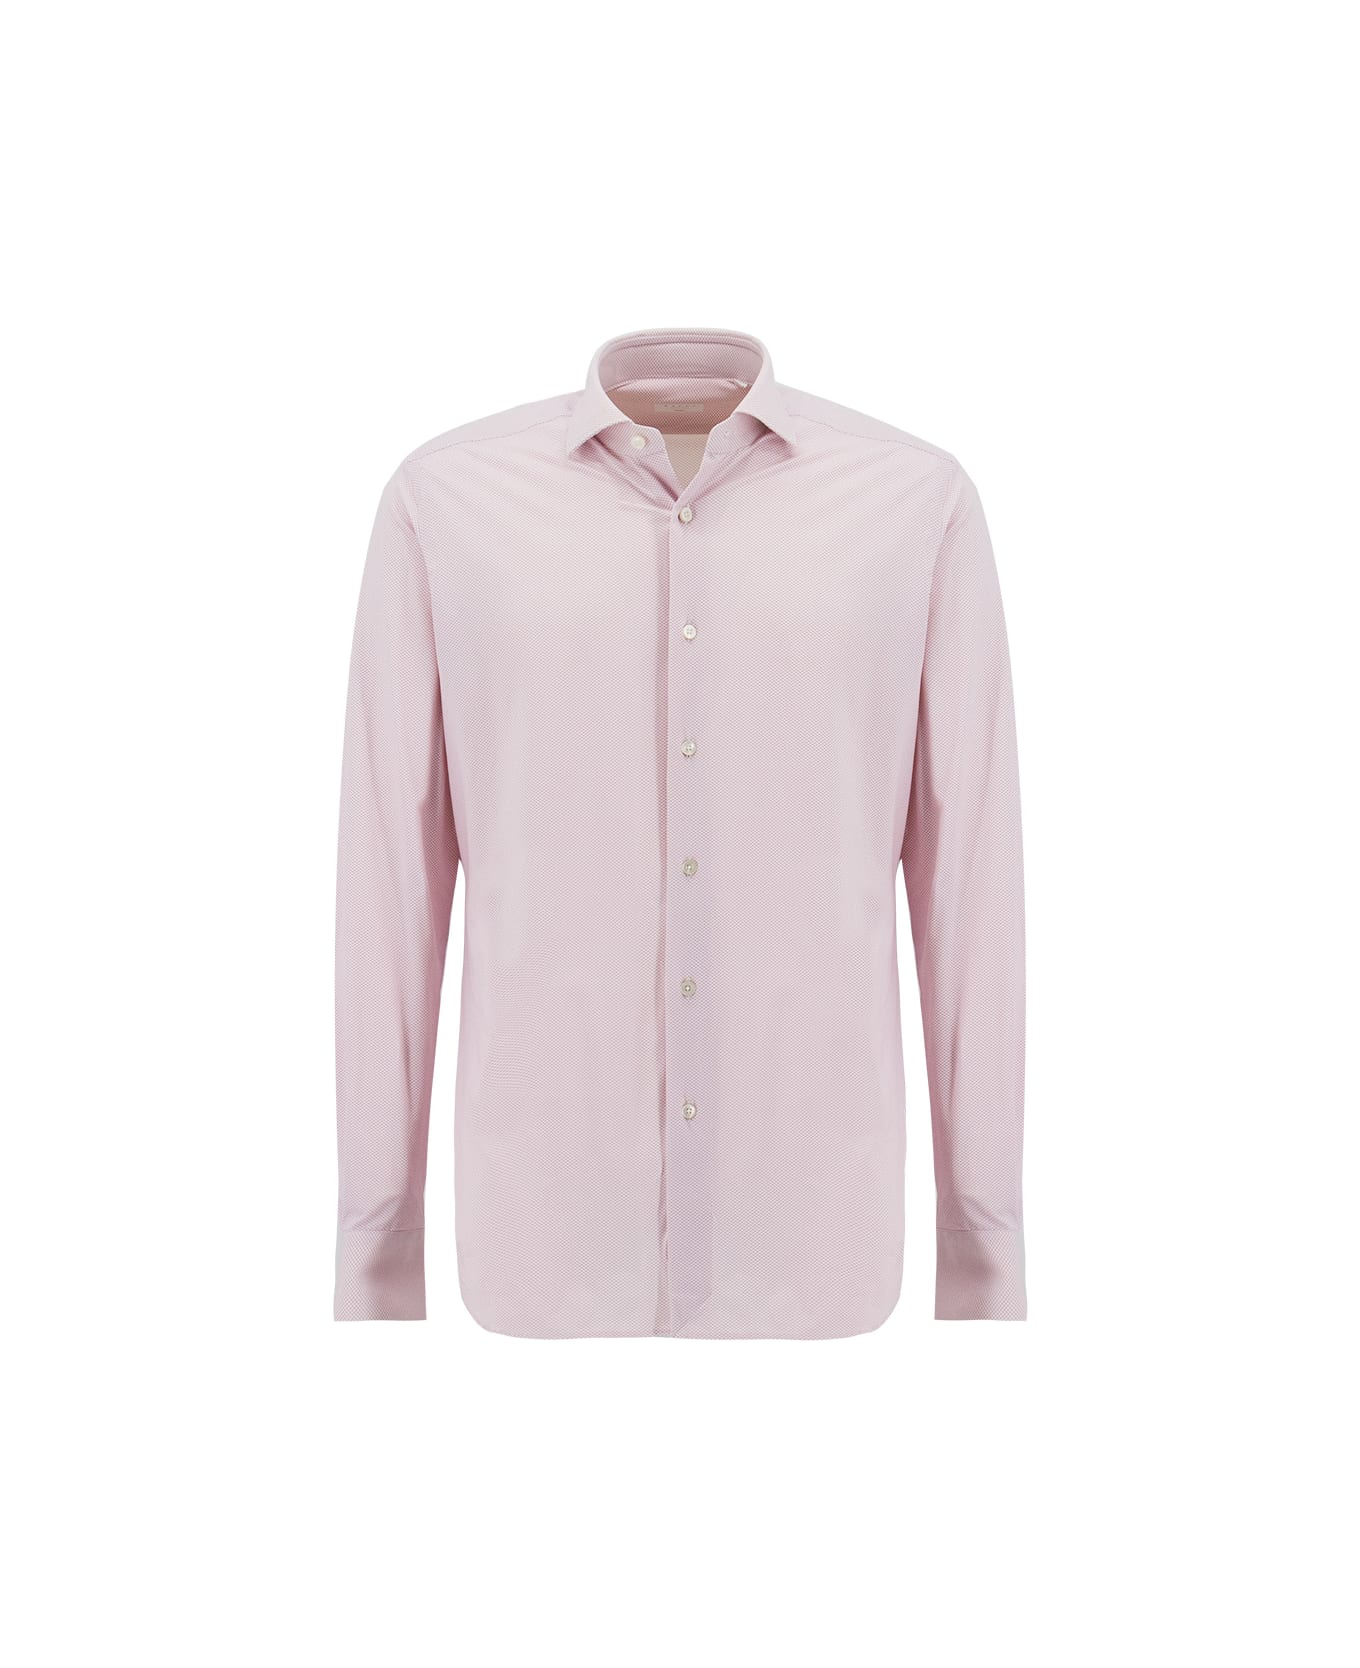 Xacus Shirt - PINK AND WHITE FANTASY